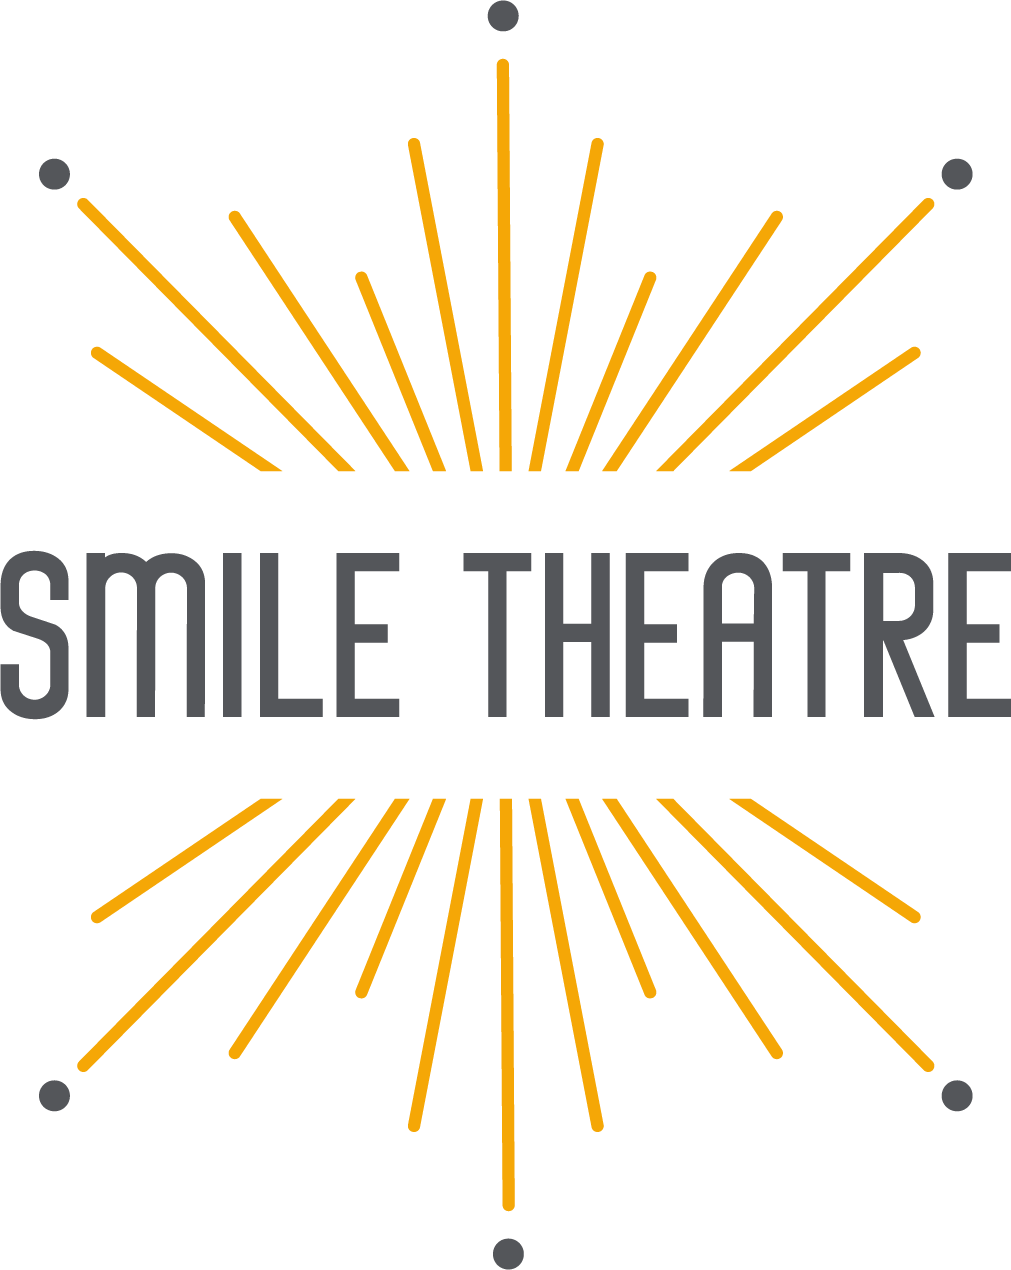 Smile Theatre - Musical Theatre programming for seniors in care